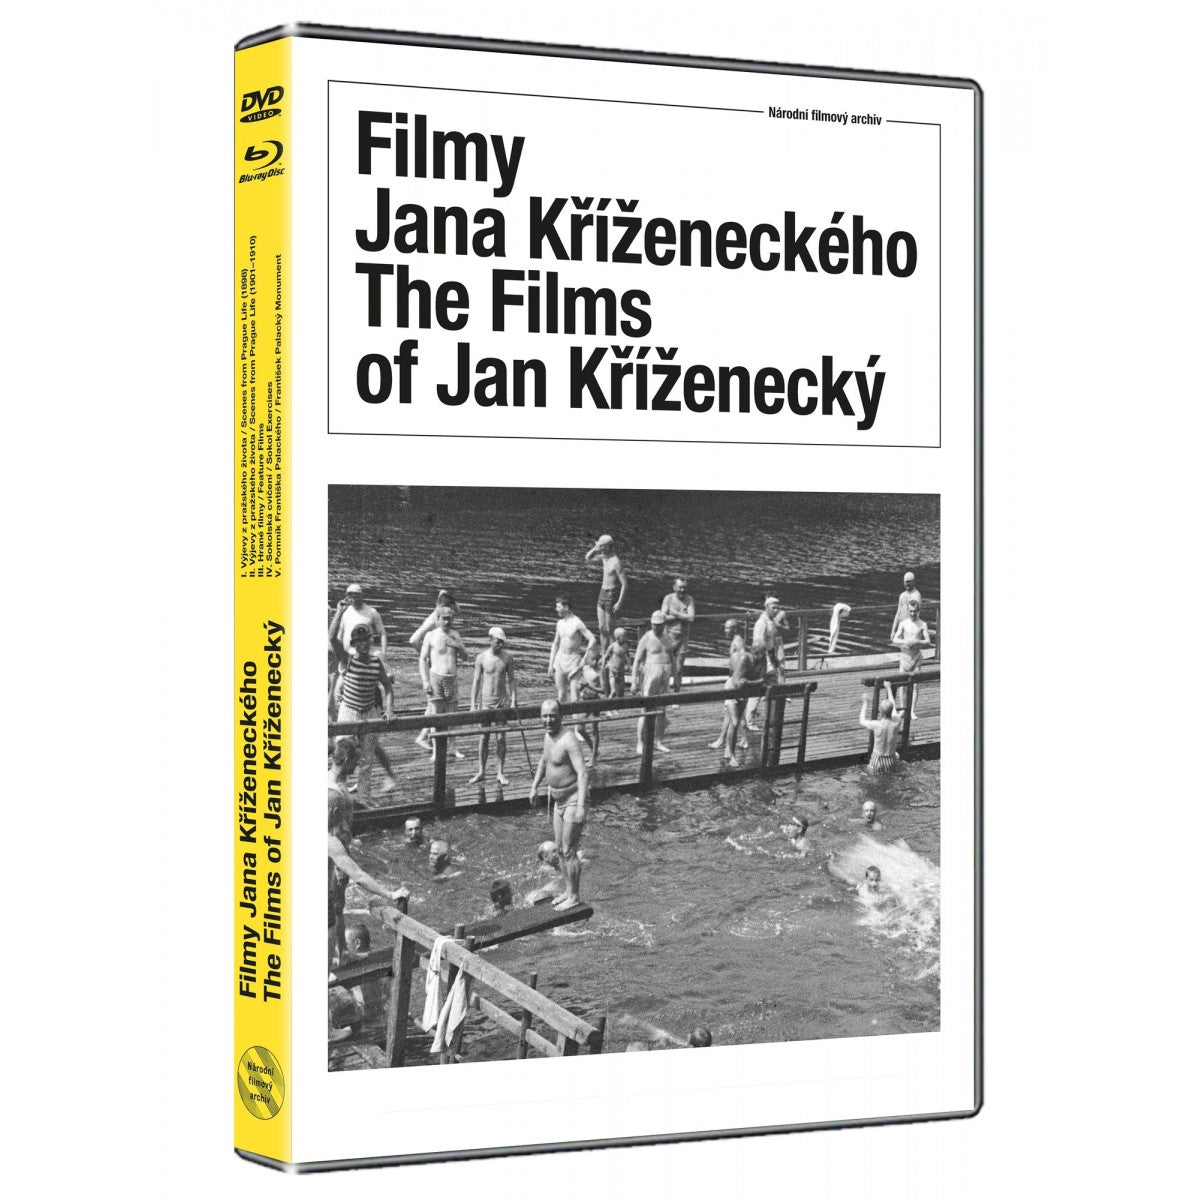 Die Filme von Jan Krizenecky / Filmy Jana Krizeneckeho DVD+BD